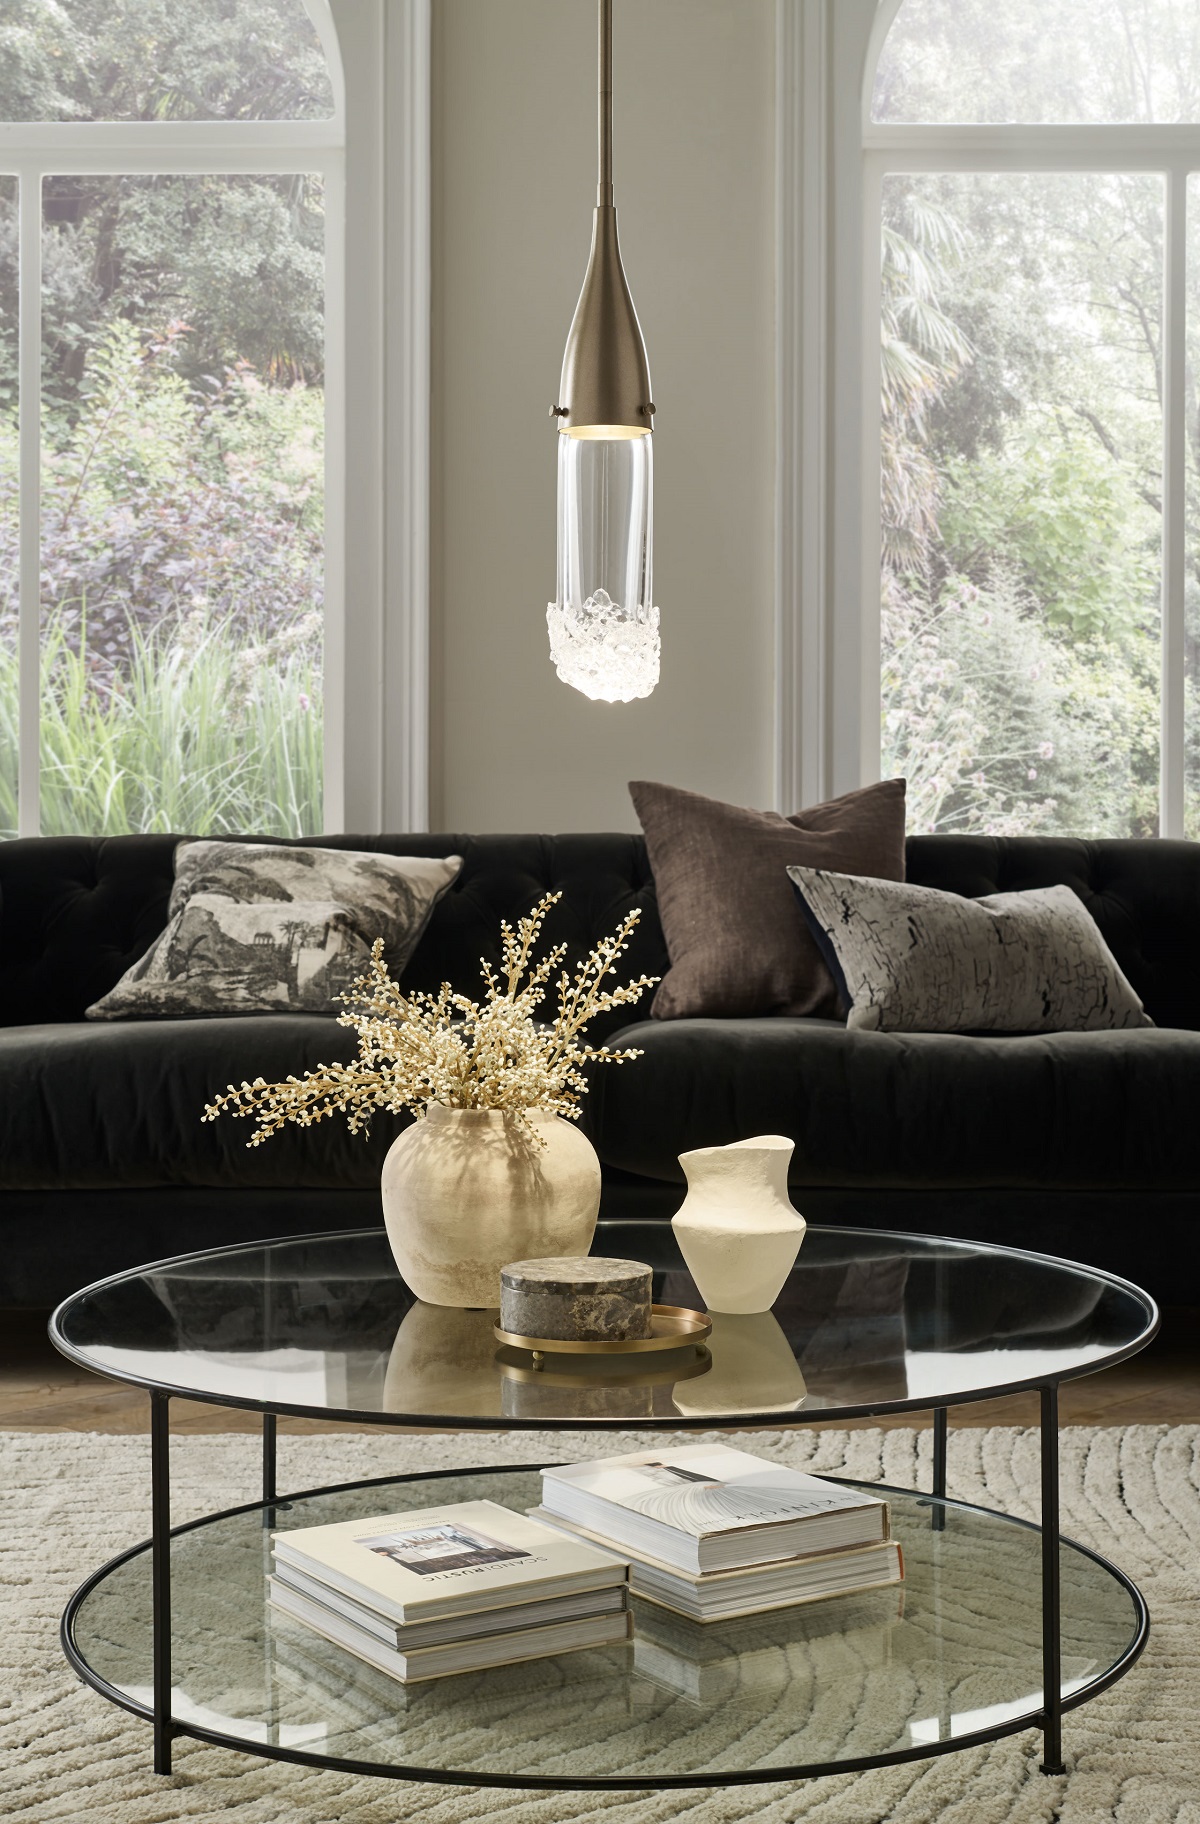 Single Fizz pendant light above a glass coffee table